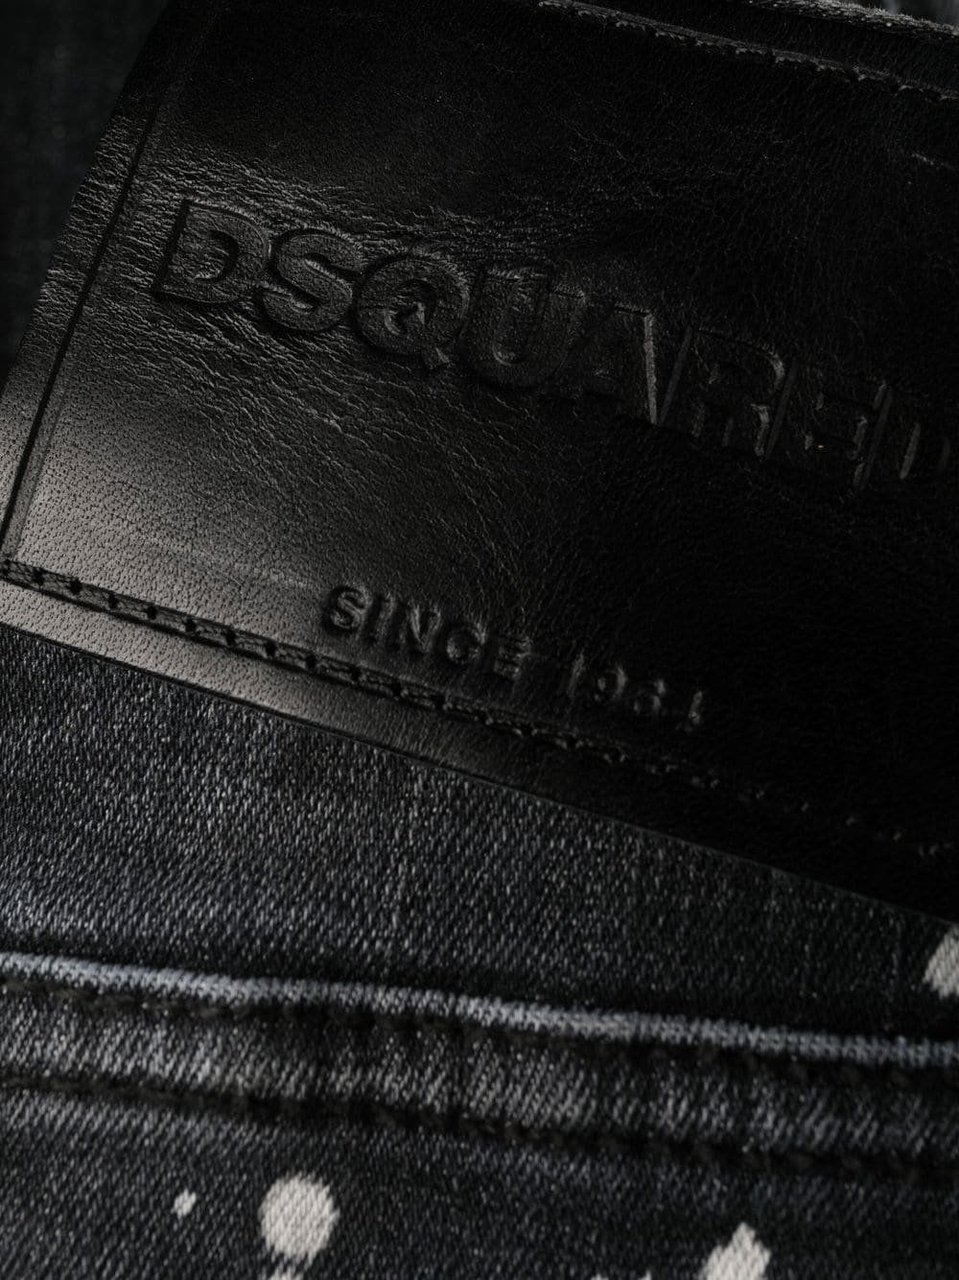 Dsquared2 Jeans Black Zwart